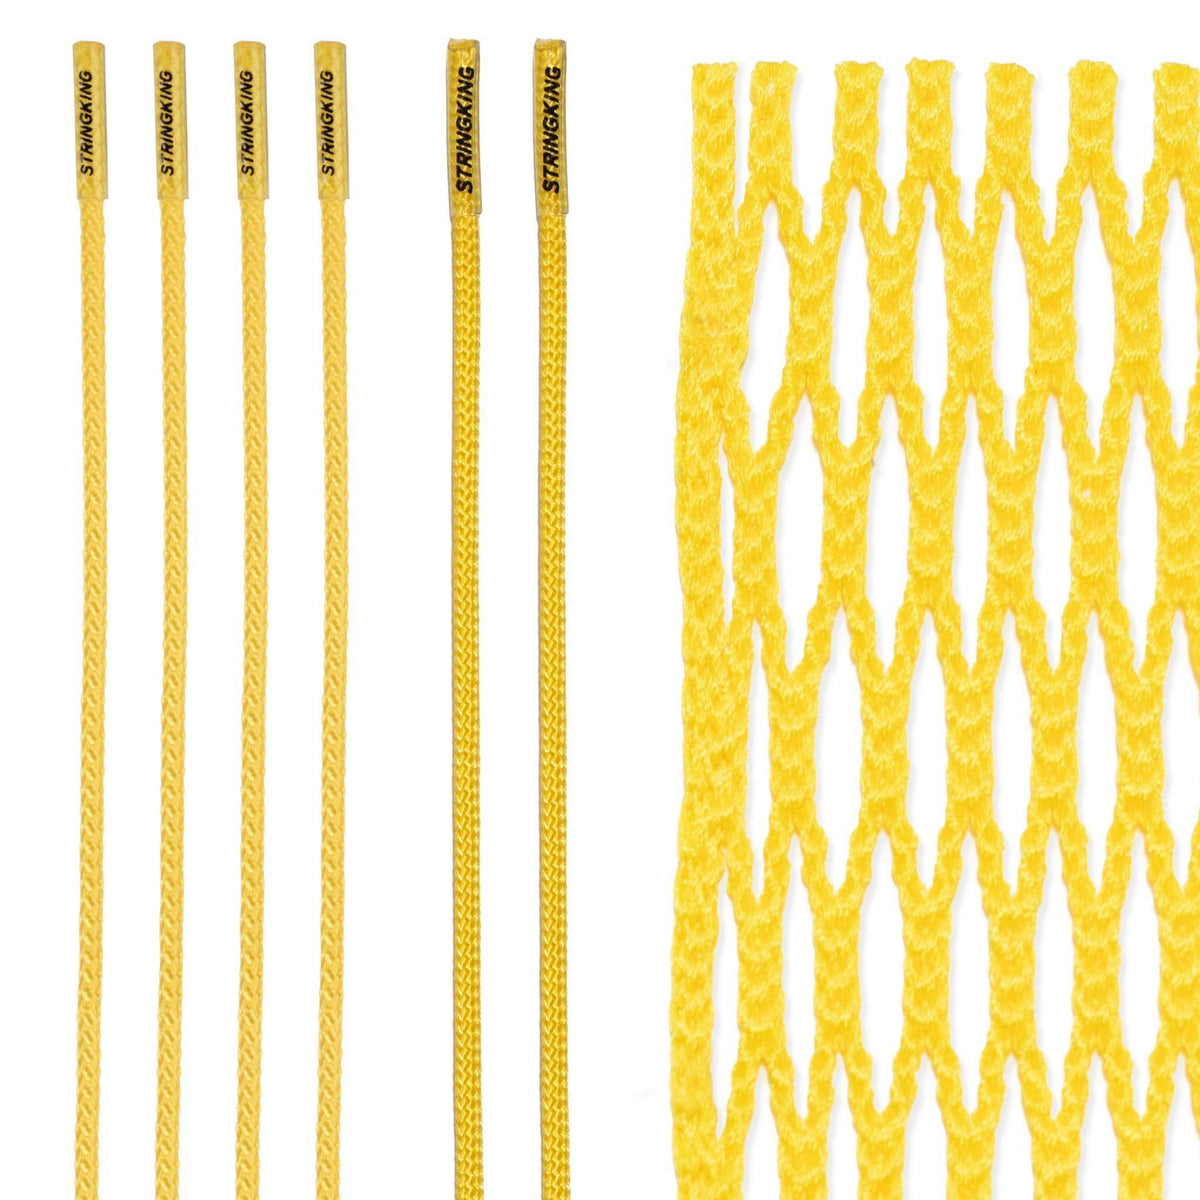 StringKing Stringing Supplies Yellow StringKing Womens Type 4 Lacrosse Mesh Kit from Lacrosse Fanatic